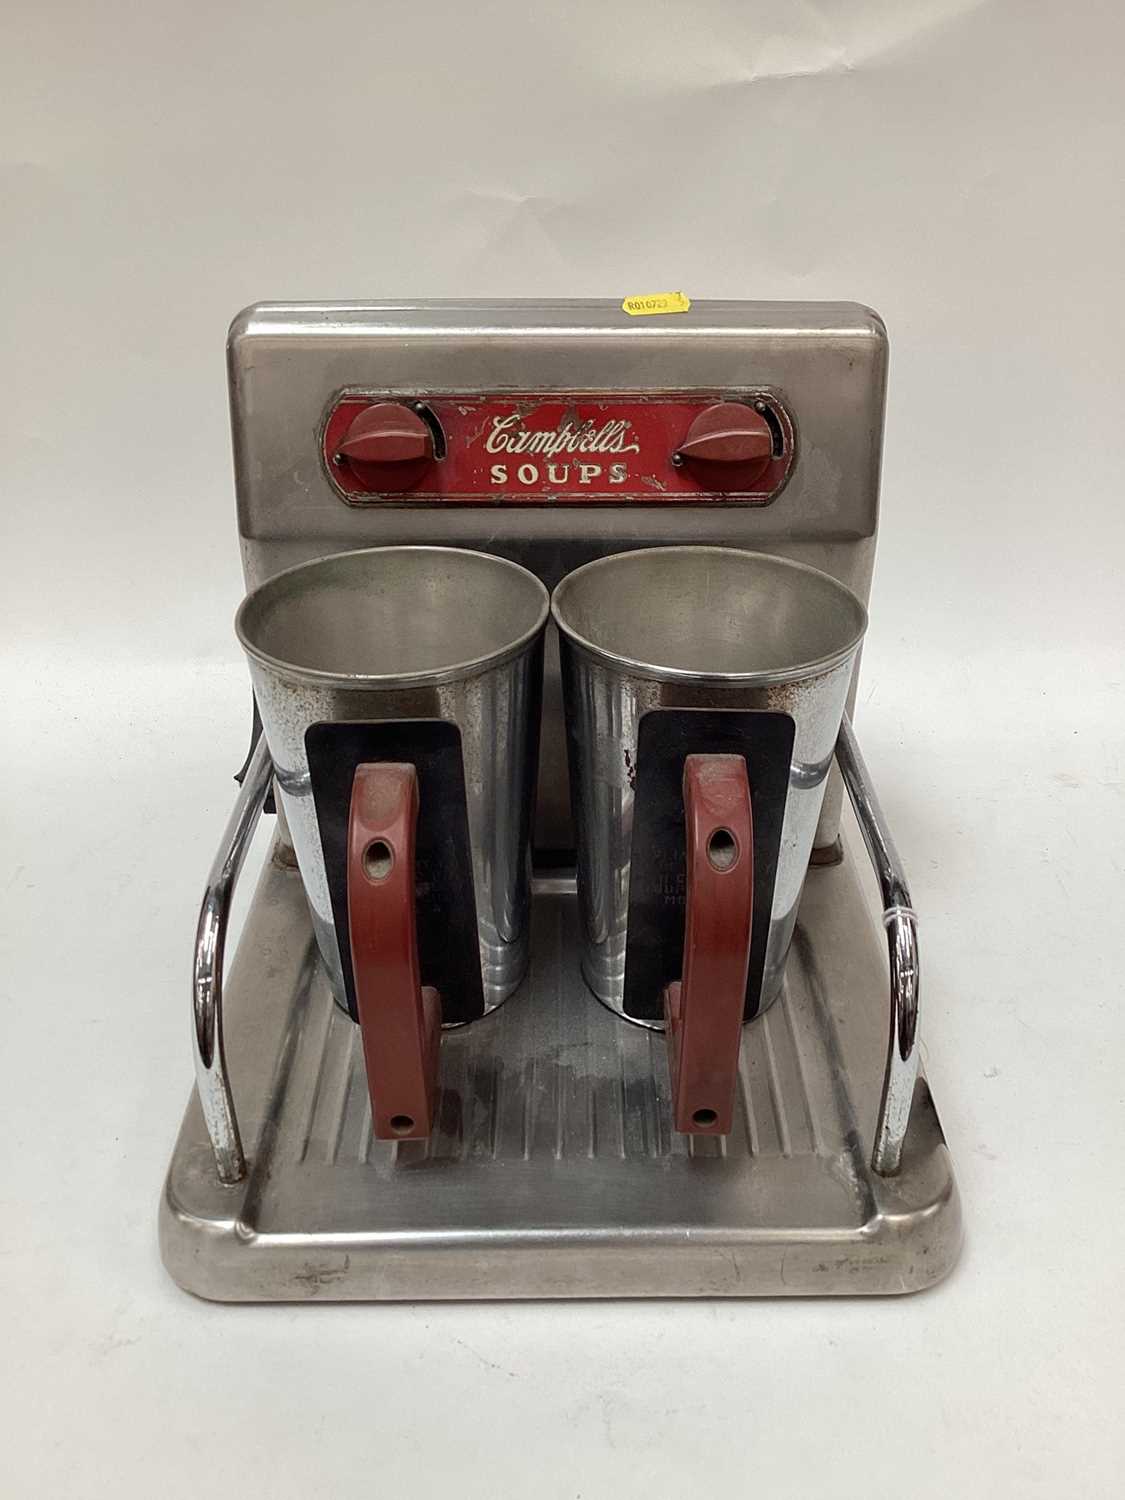 Vintage Campbell's Soups cafe machine